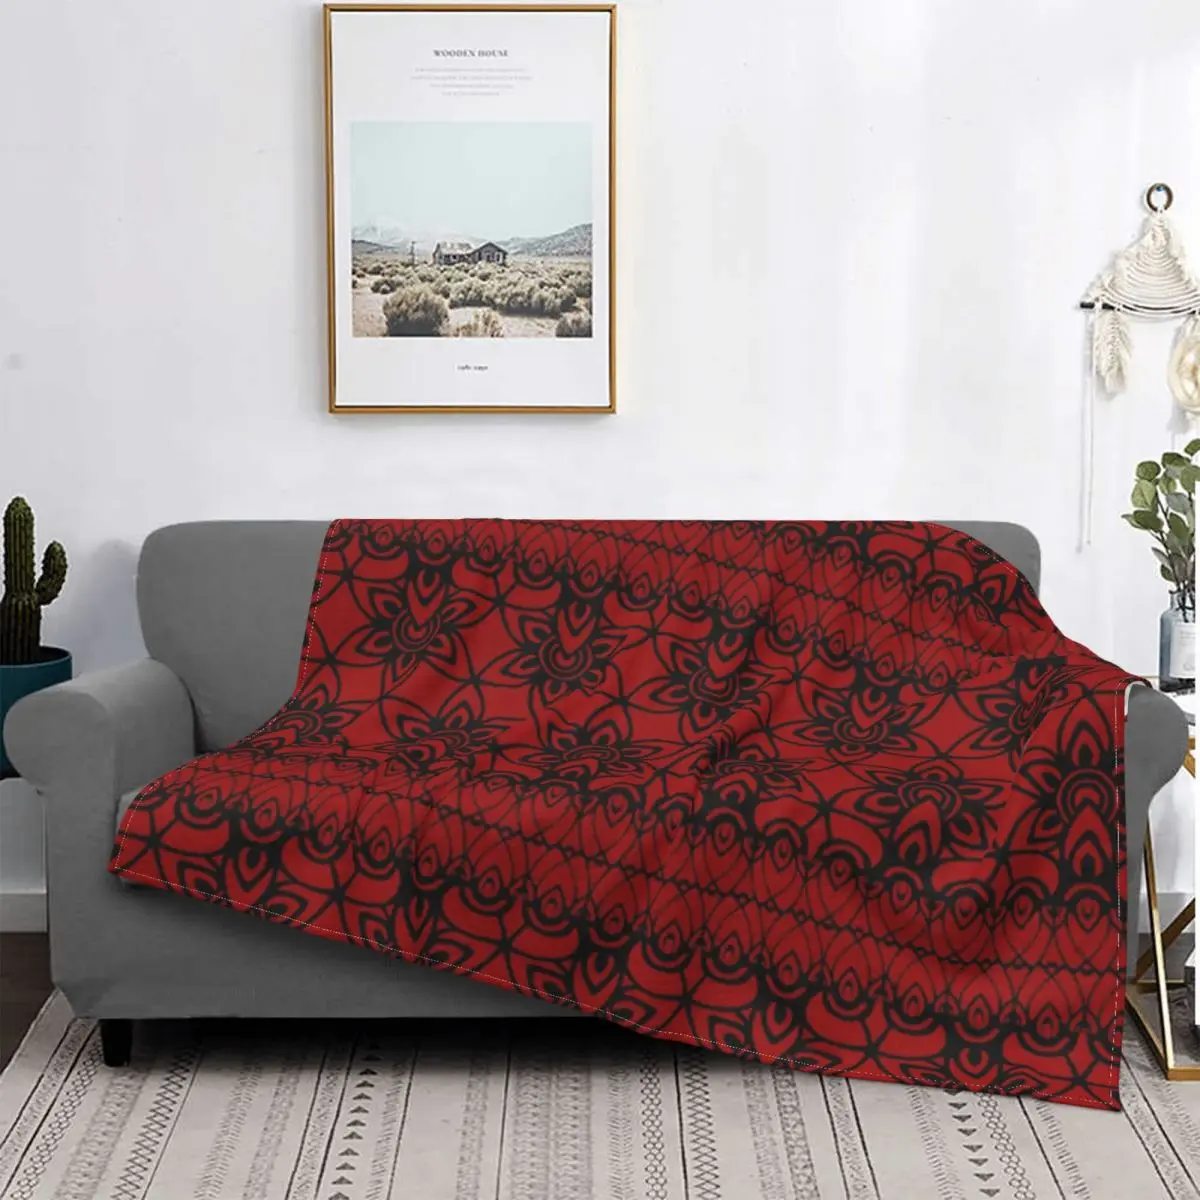 

Manta de encaje Floral negro sobre rojo, para cama colcha, alfombra a cuadros, manta con capucha para sofá, fundas para cama de